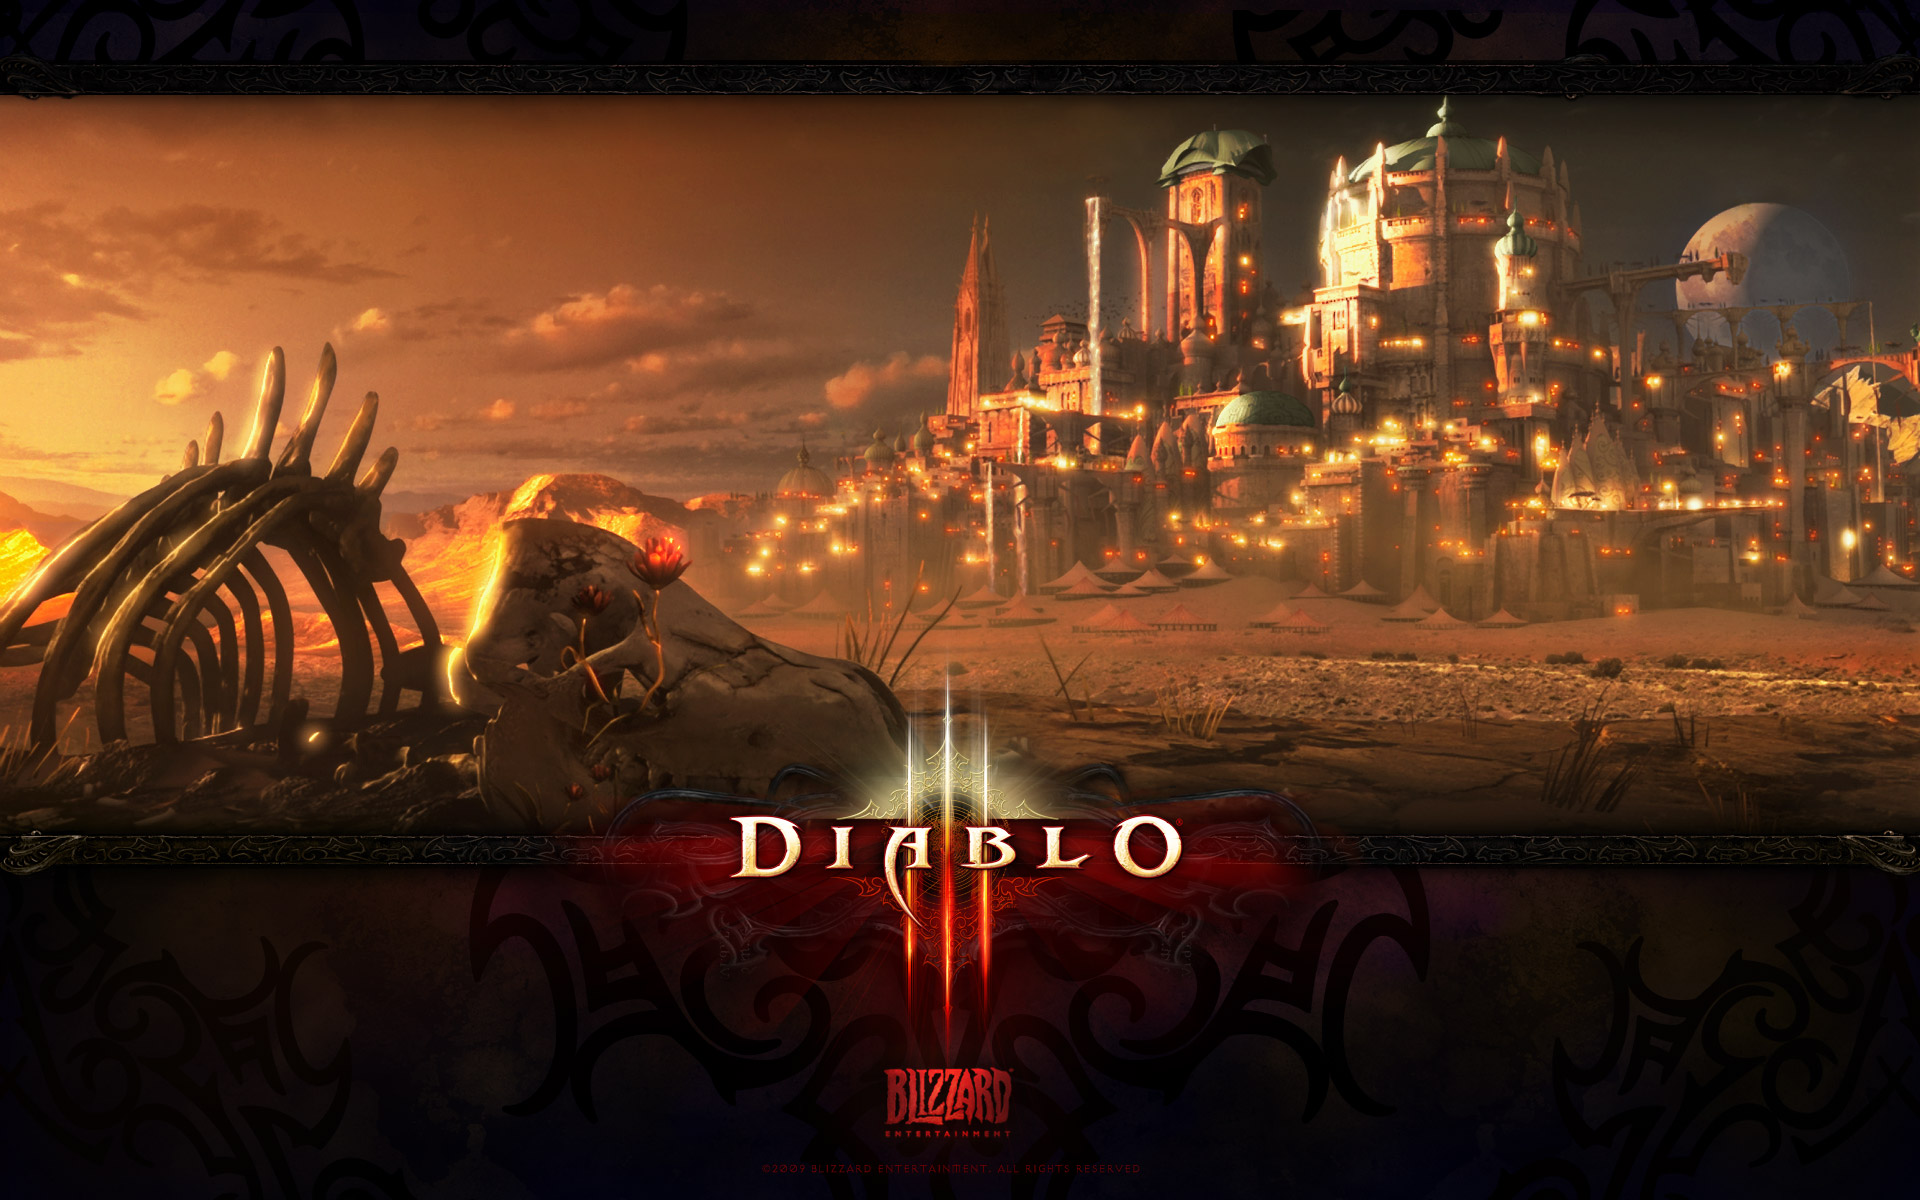 Pingback: Diablo-3.net » Vier neue Diablo 3 Wallpapers